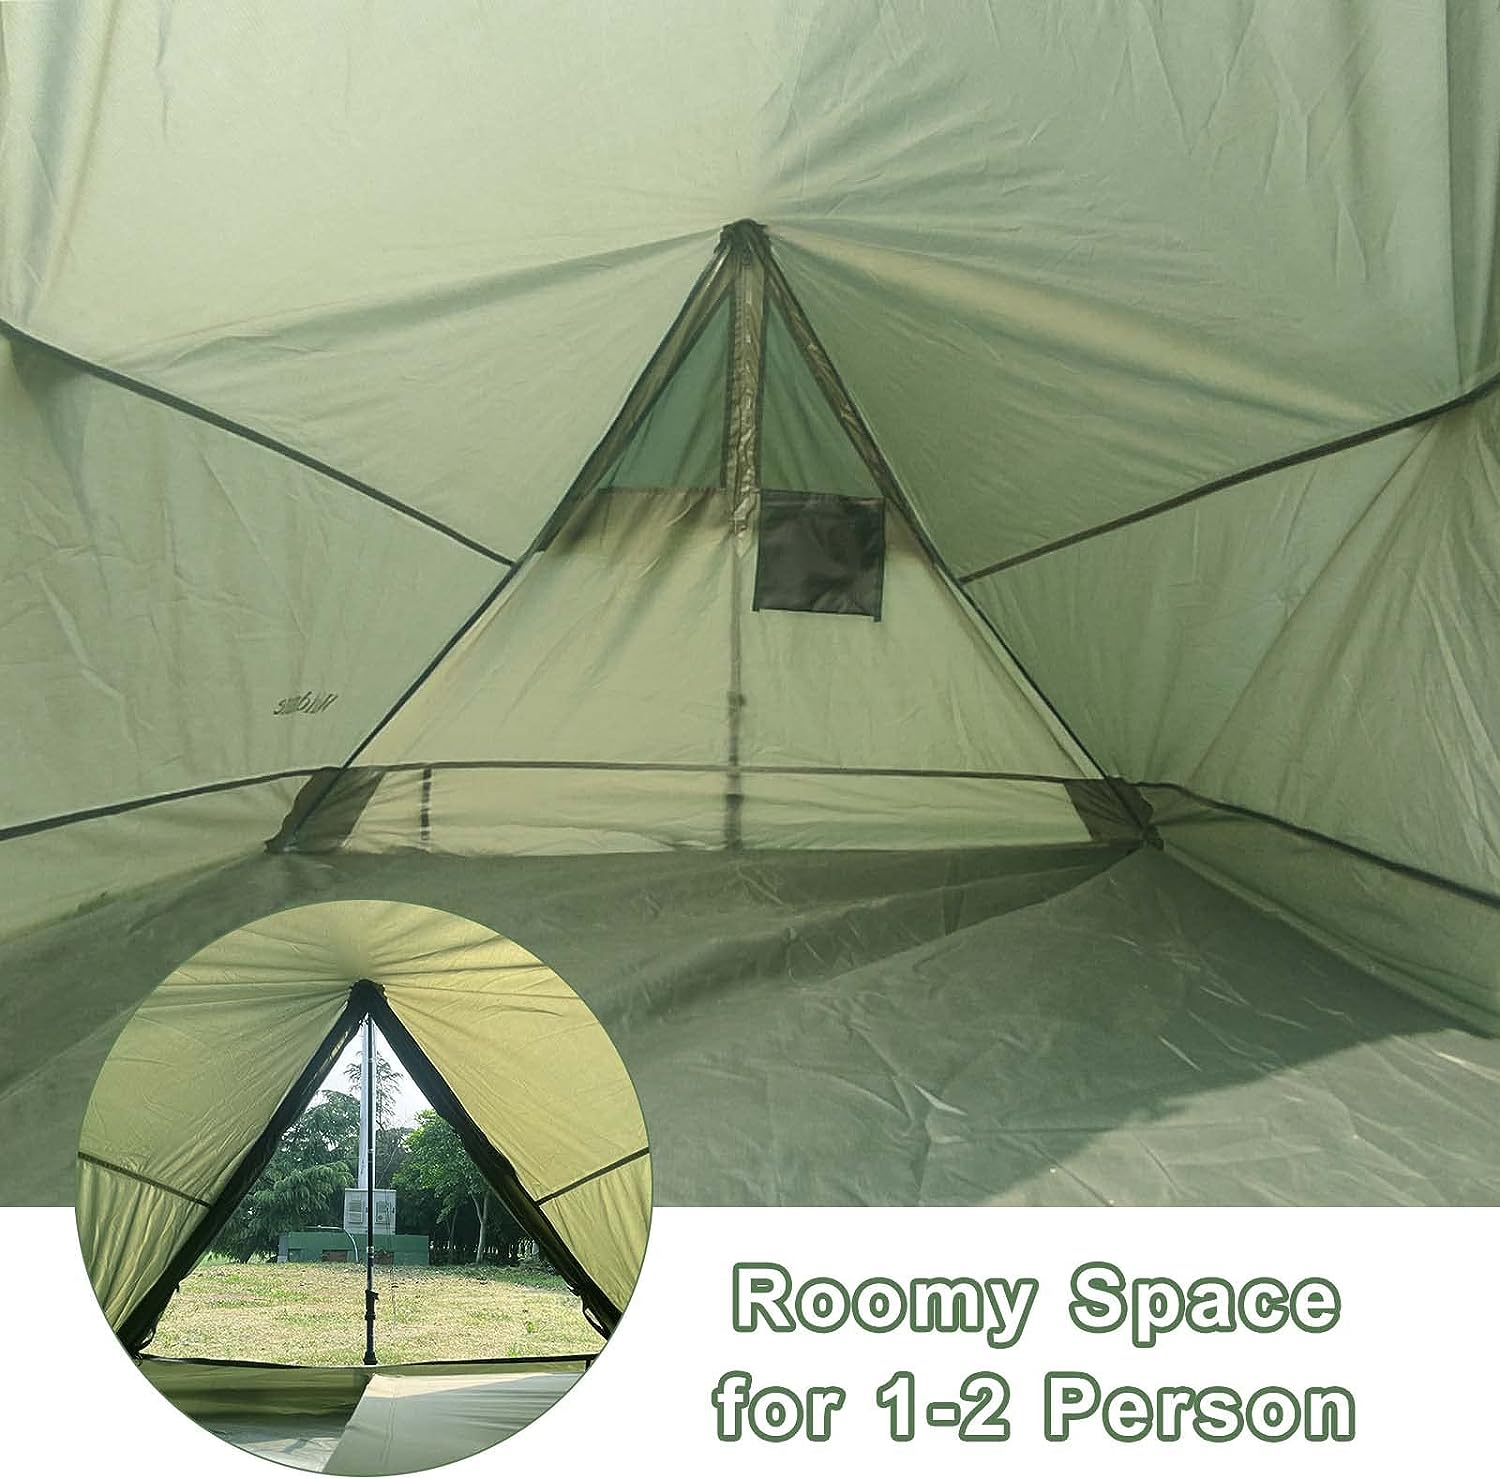 waldzimmer ridge tent green polyester backpacking tent inside